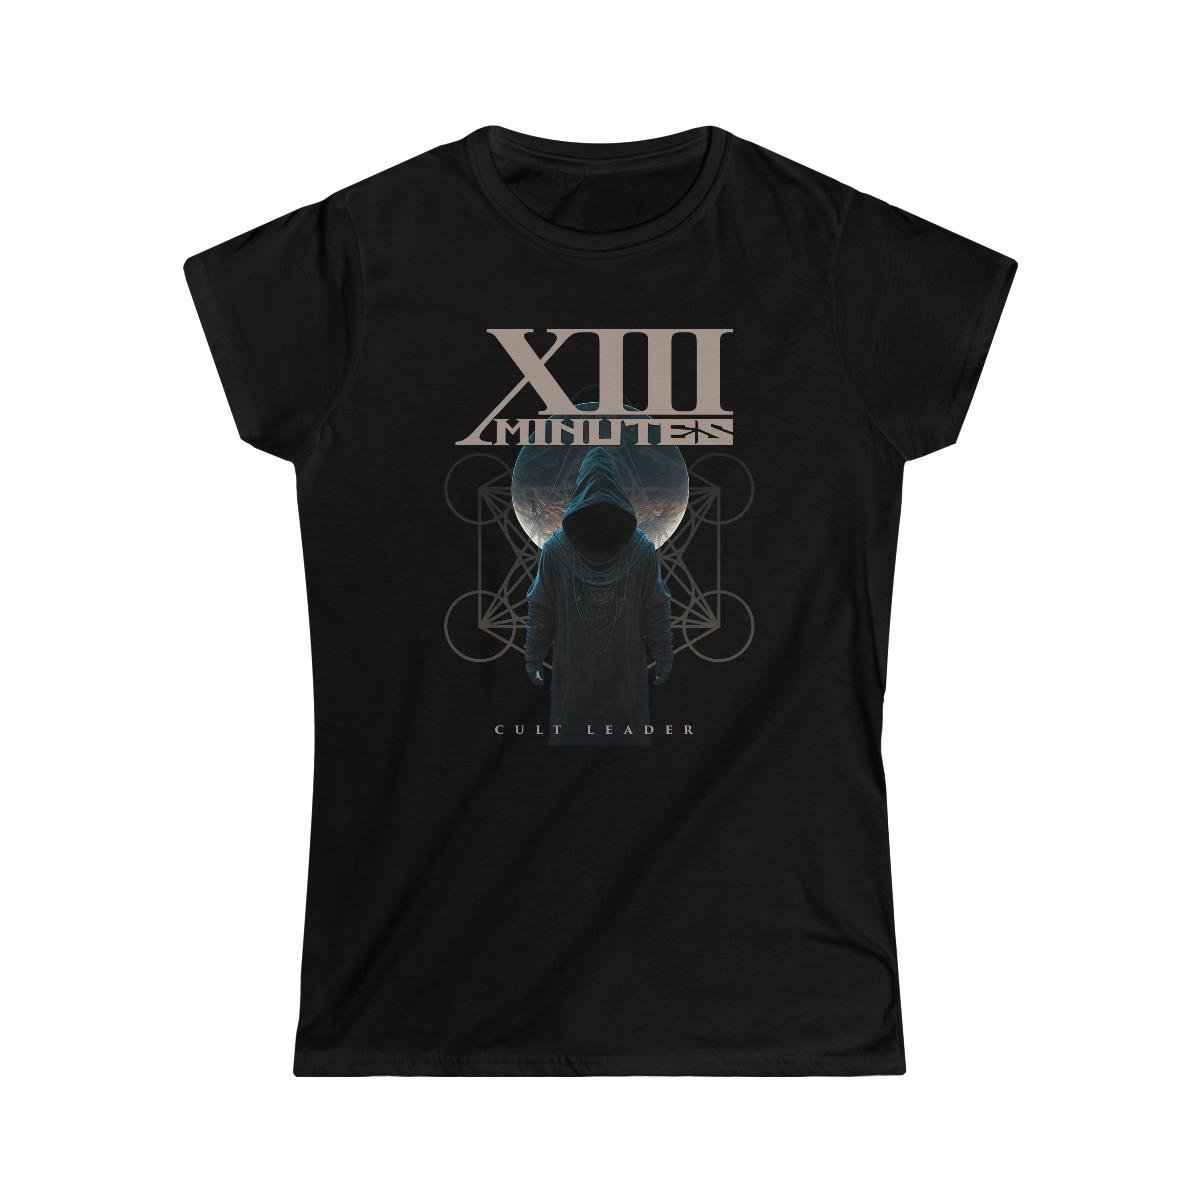 XIII Minutes – Cult Leader Women’s Short Sleeve Tshirt